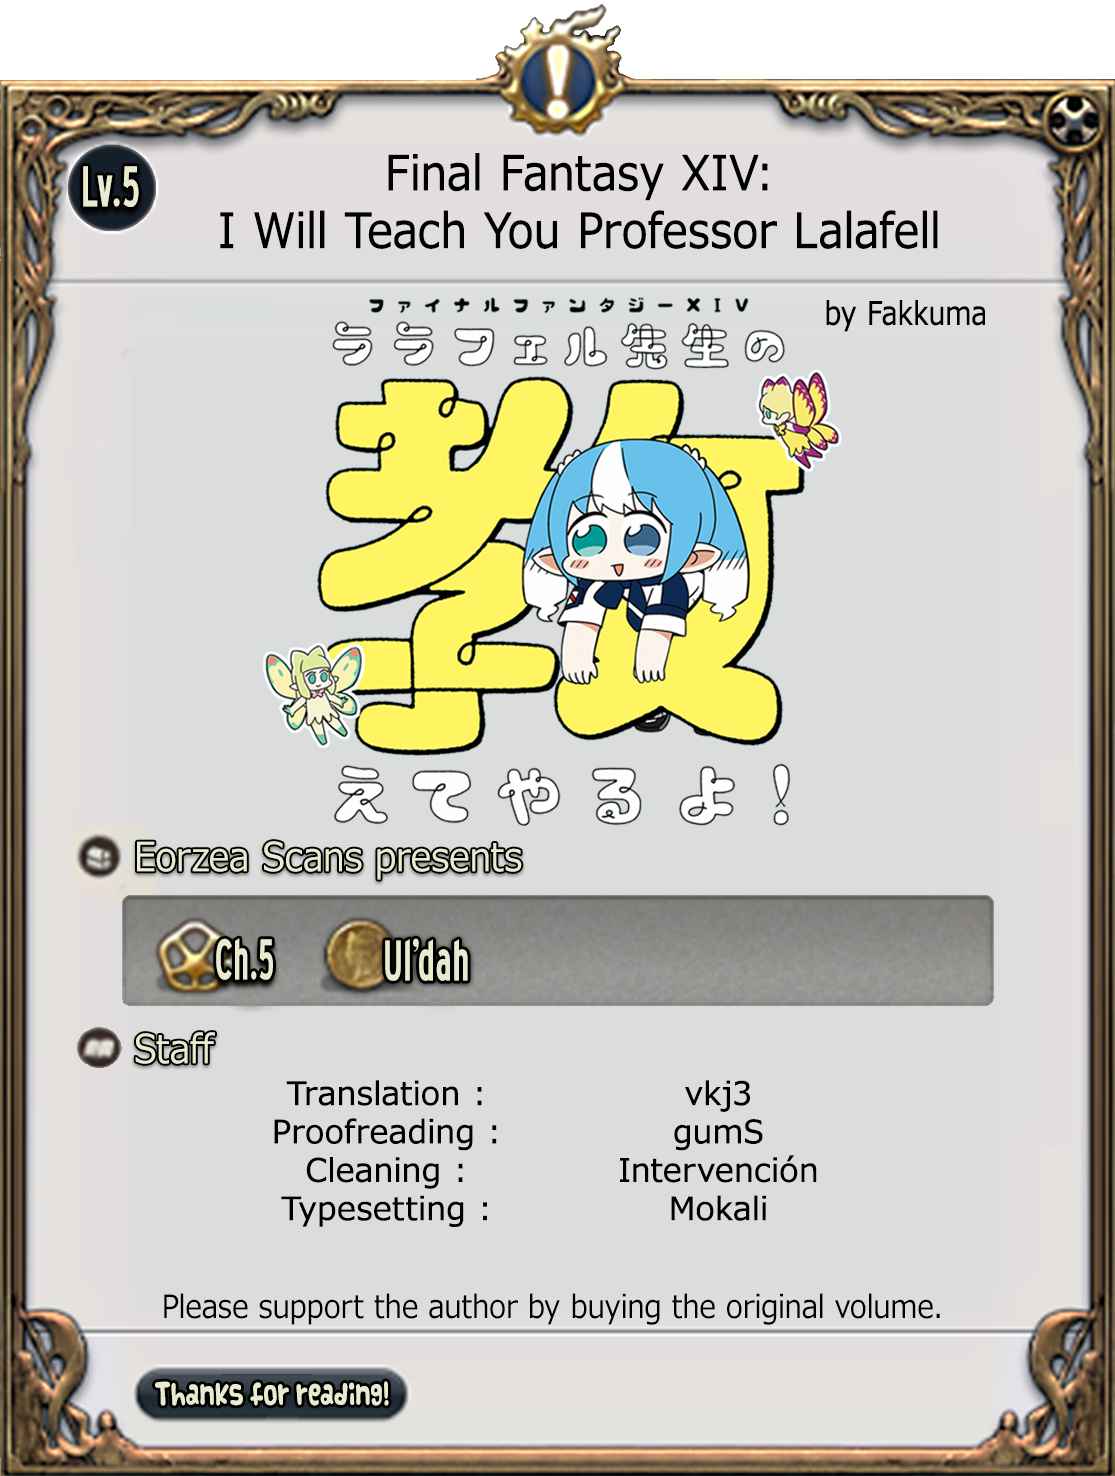 Final Fantasy XIV Lalafell sensei Will Teach You! Vol. 1 Ch. 5 Ul'dah